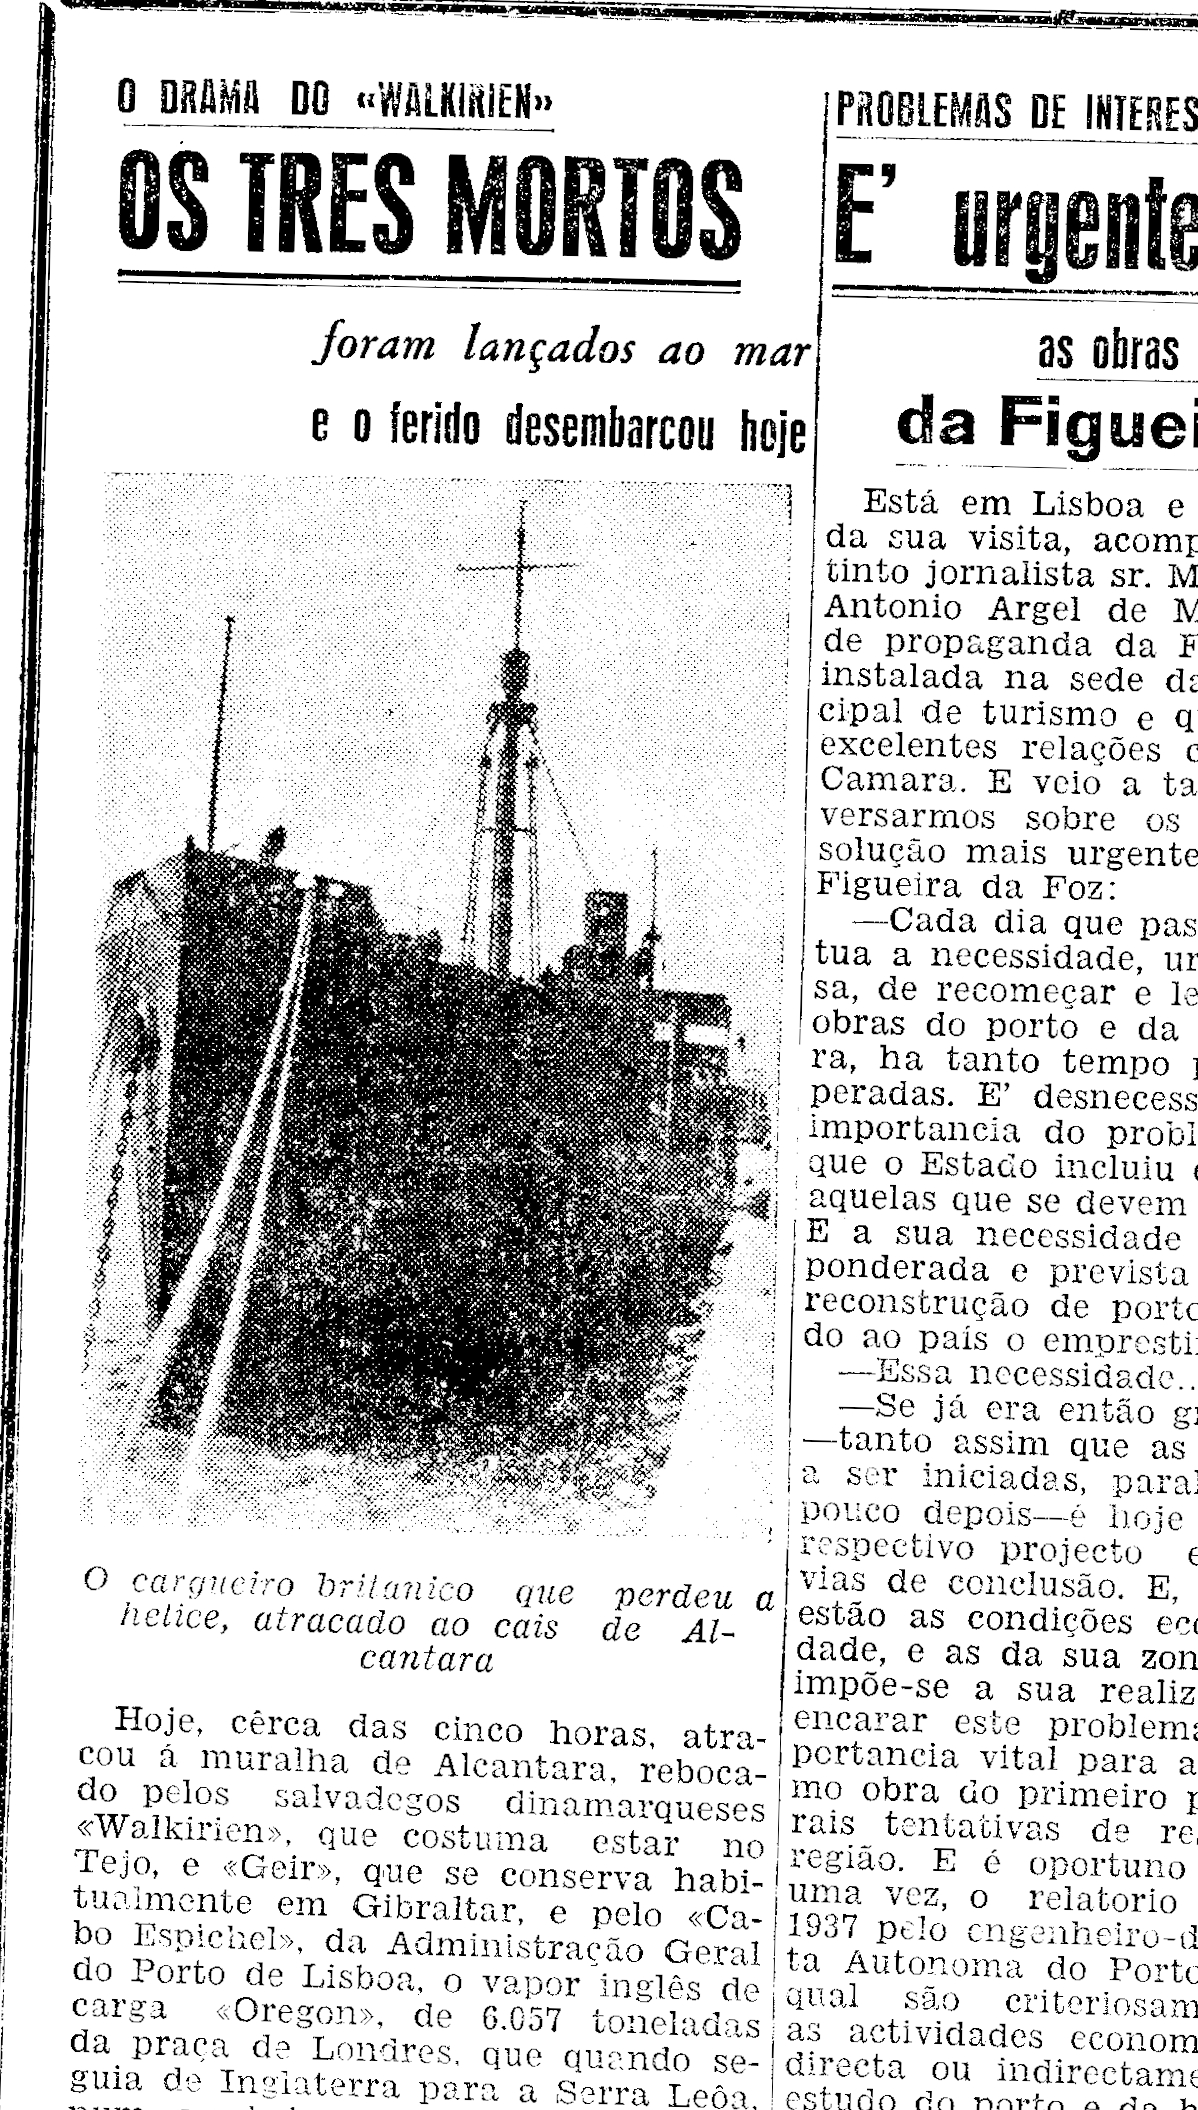 News of the death of José Francisco Reis  published in the newspaper Diário de Lisboa